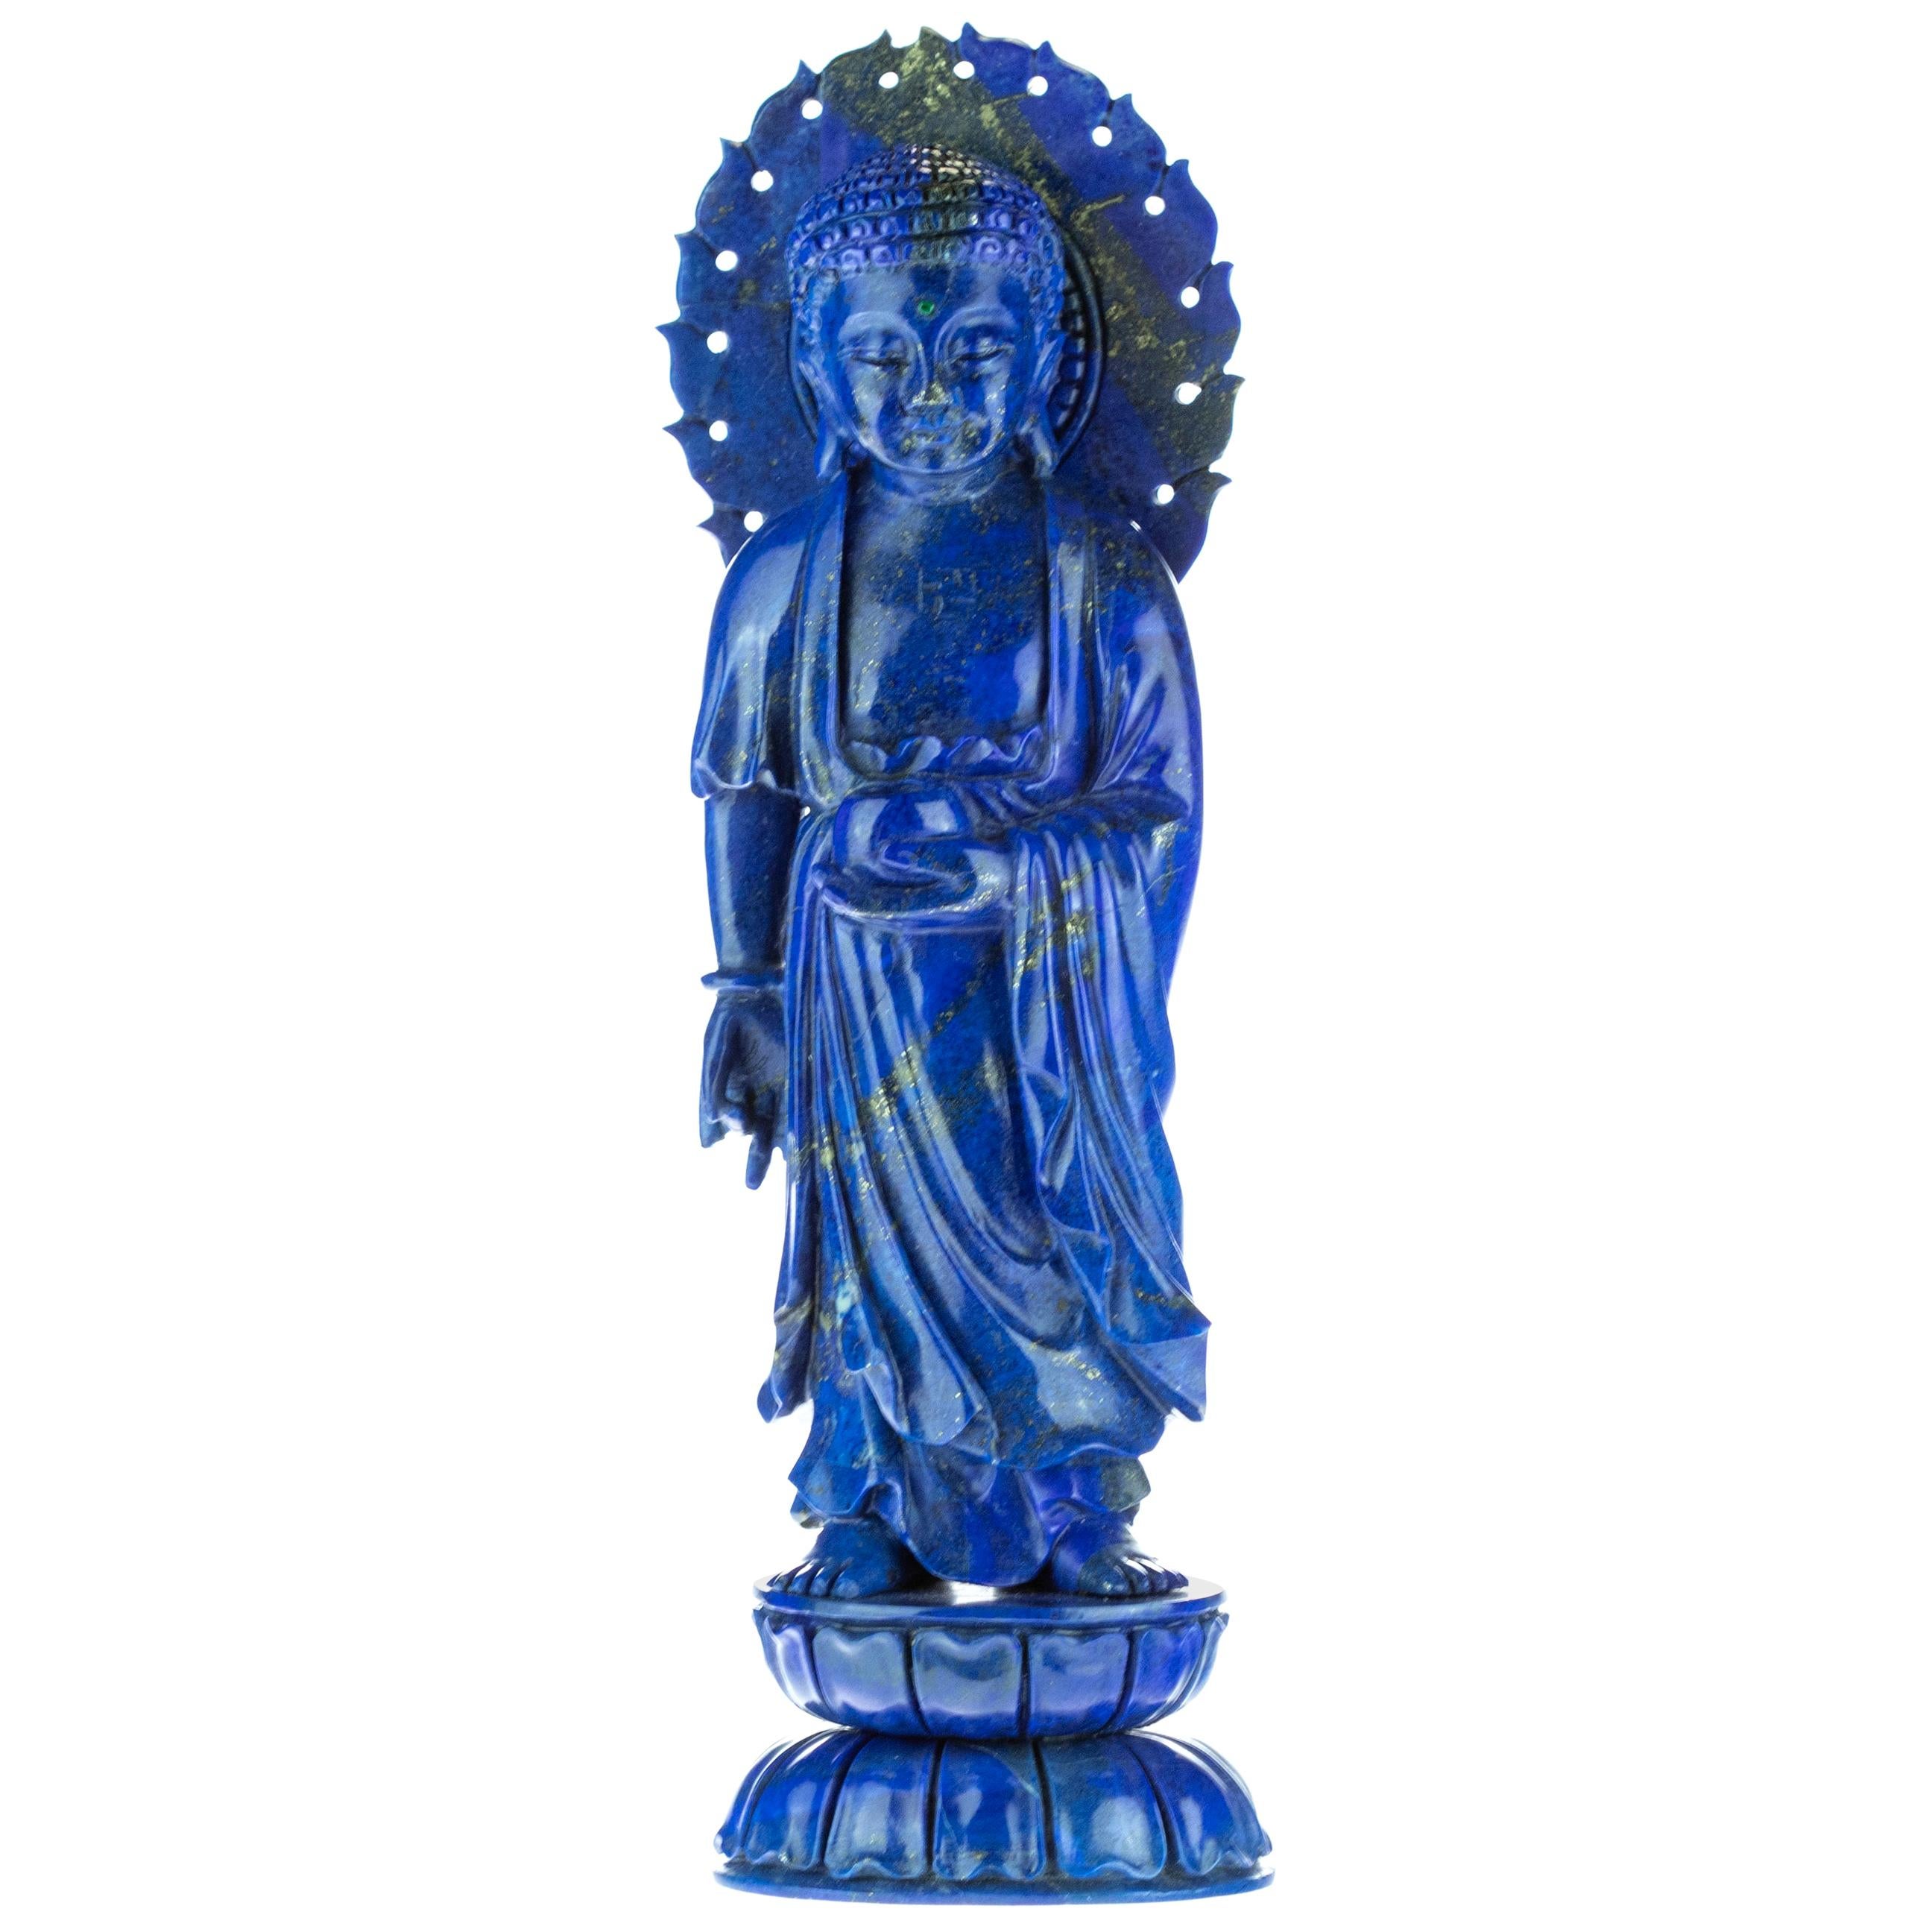 Lapis Lazuli Guanyin Bodhisattva Female Buddha Asian Art Carved Statue Sculpture For Sale